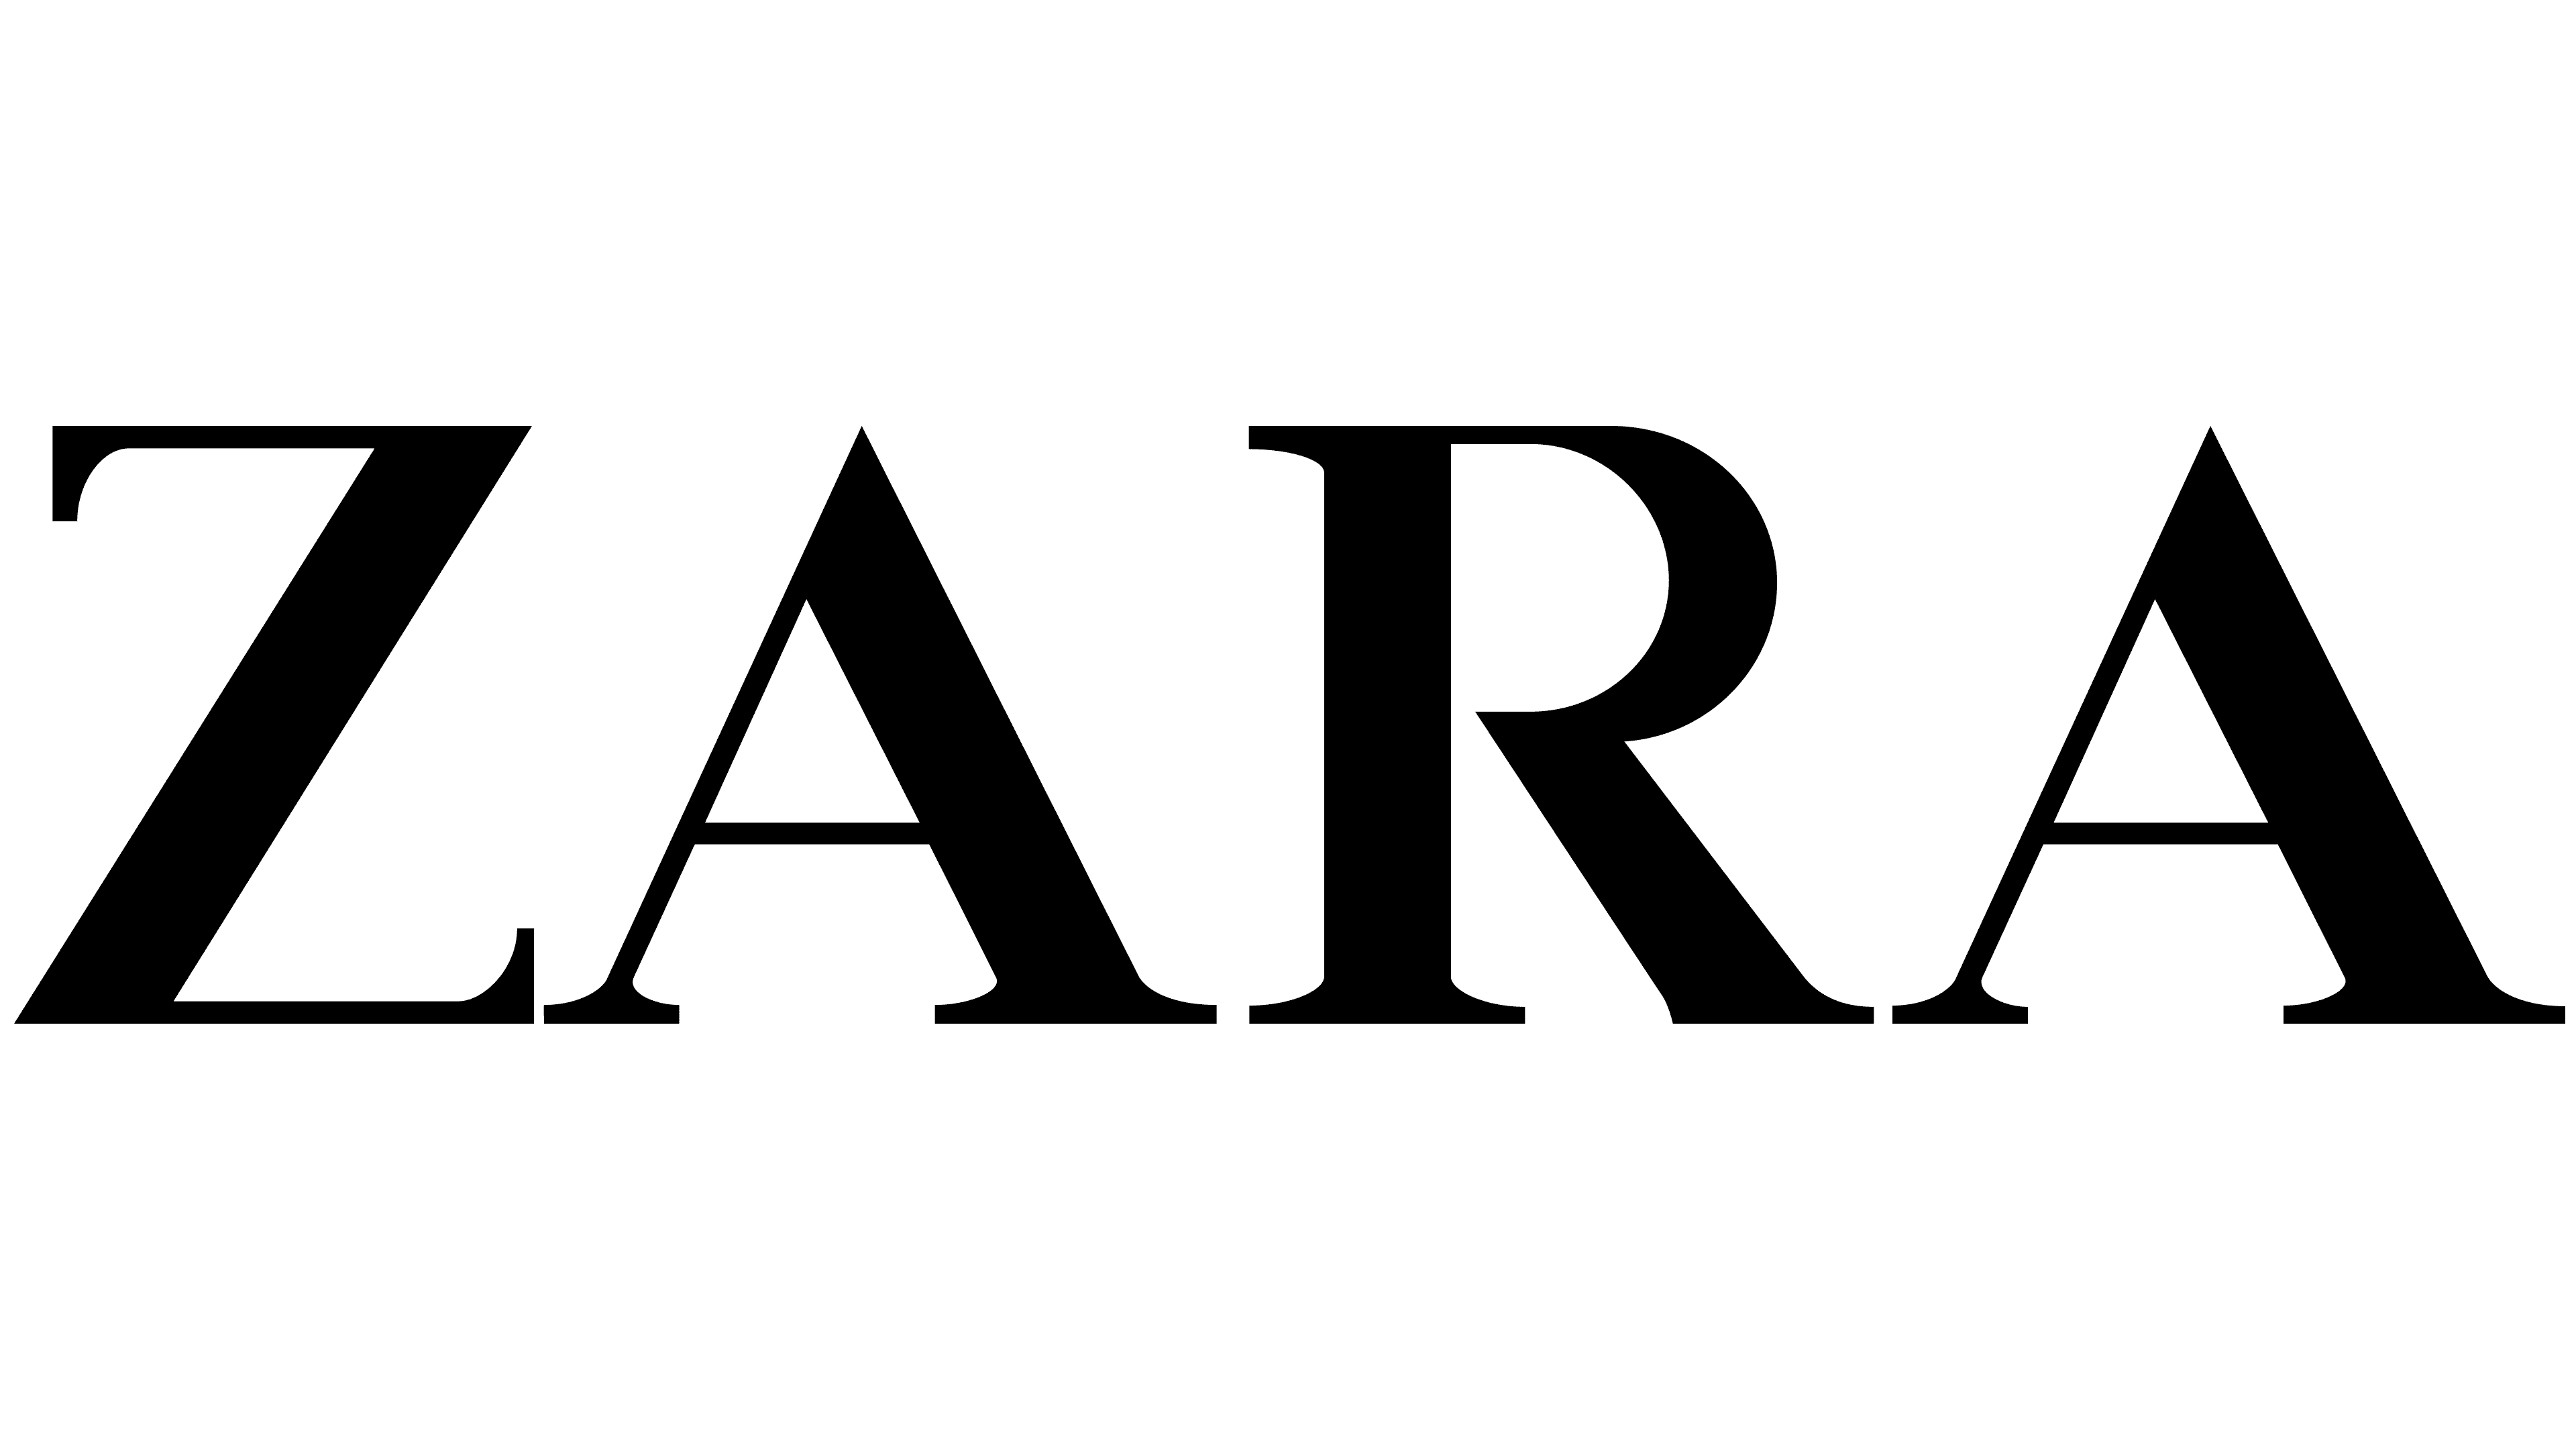  Zara Logo  Symbol History PNG 3840 2160 